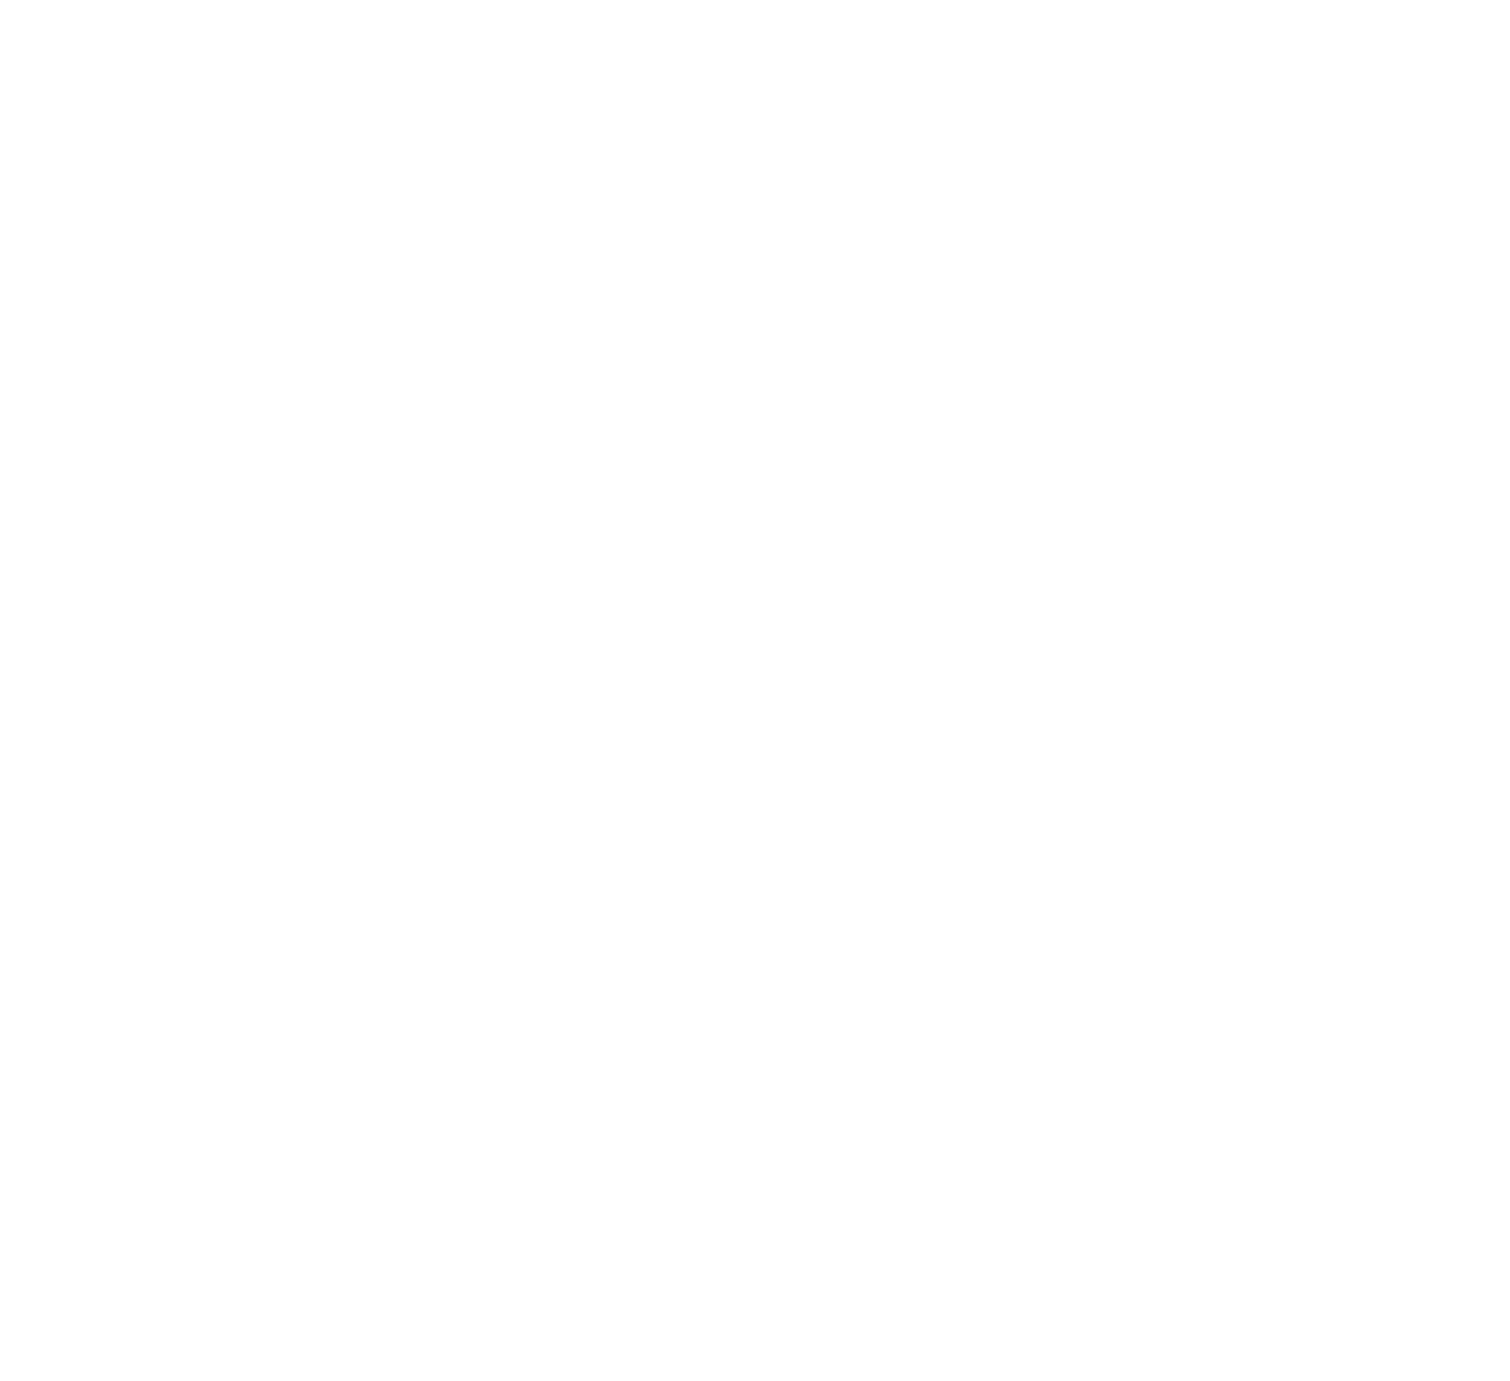 Hallmark Financial Services logo for dark backgrounds (transparent PNG)